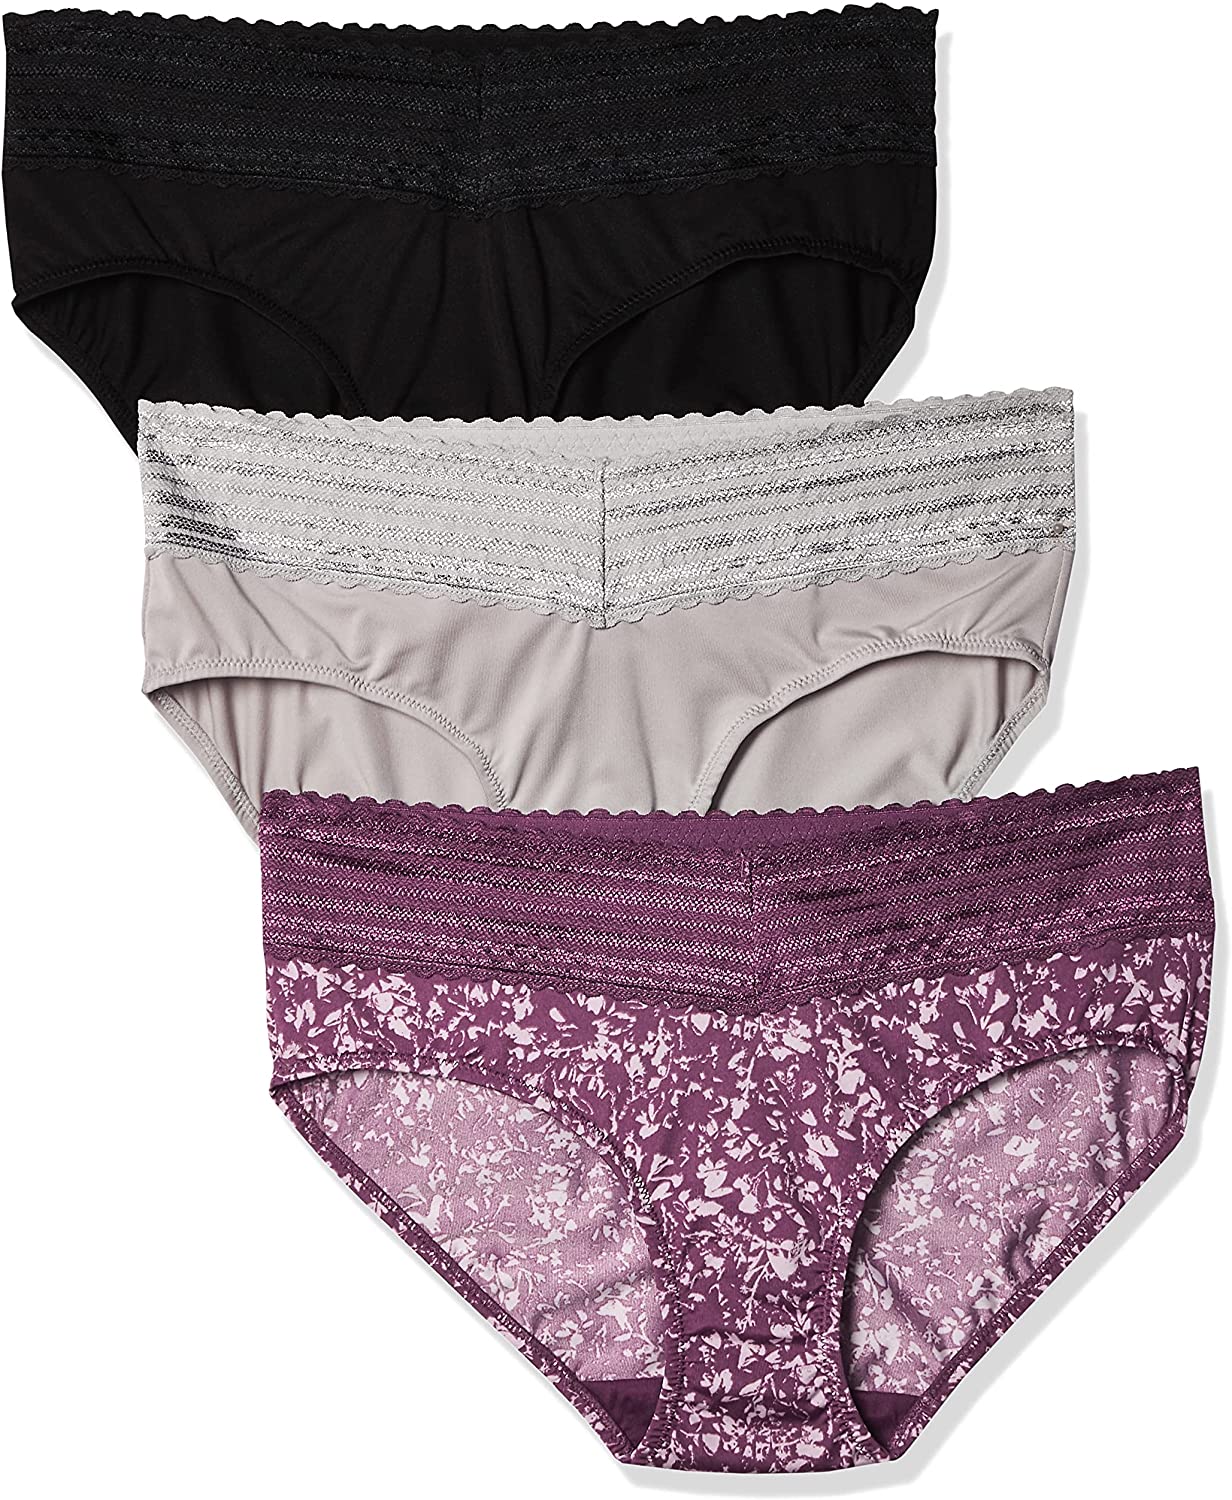 Warner's Lace Panties for Women